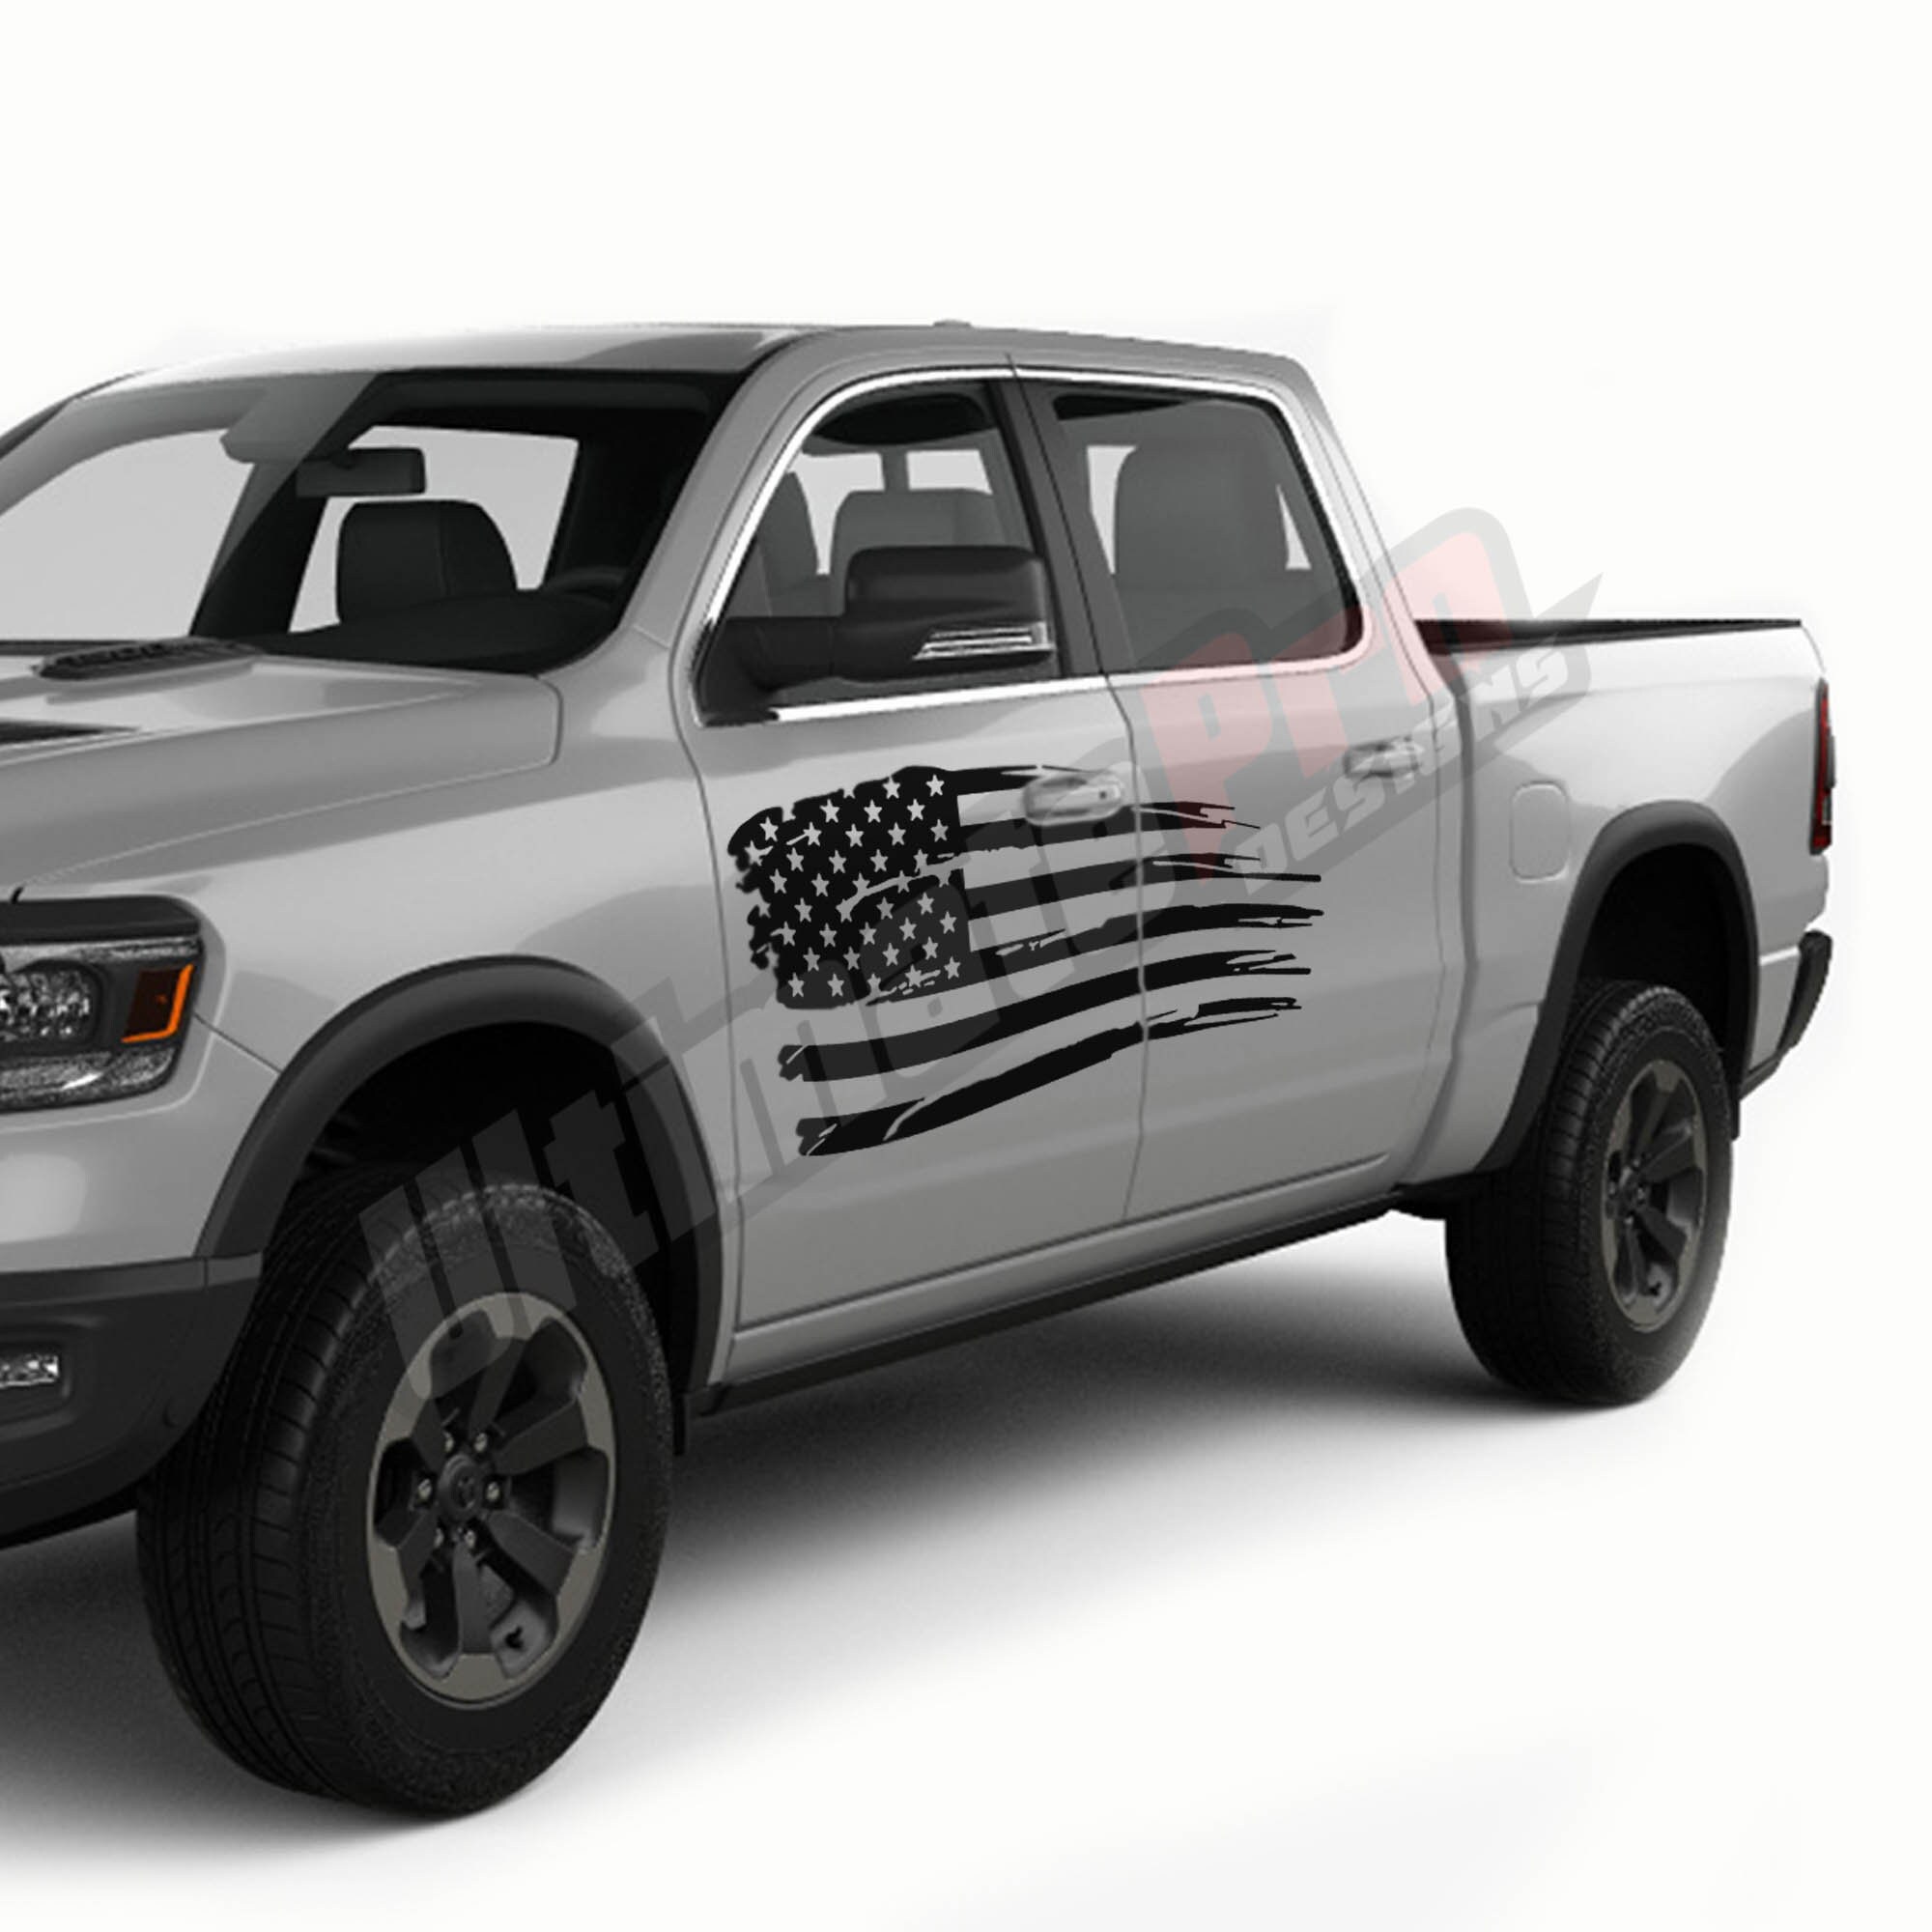 Decal Sticker Compatible With Dodge Ram Crew Cab Laramie Longhorn Srt8 1500 2017 2018 2019 2020 Left & Right Door Car Truck Vinyl